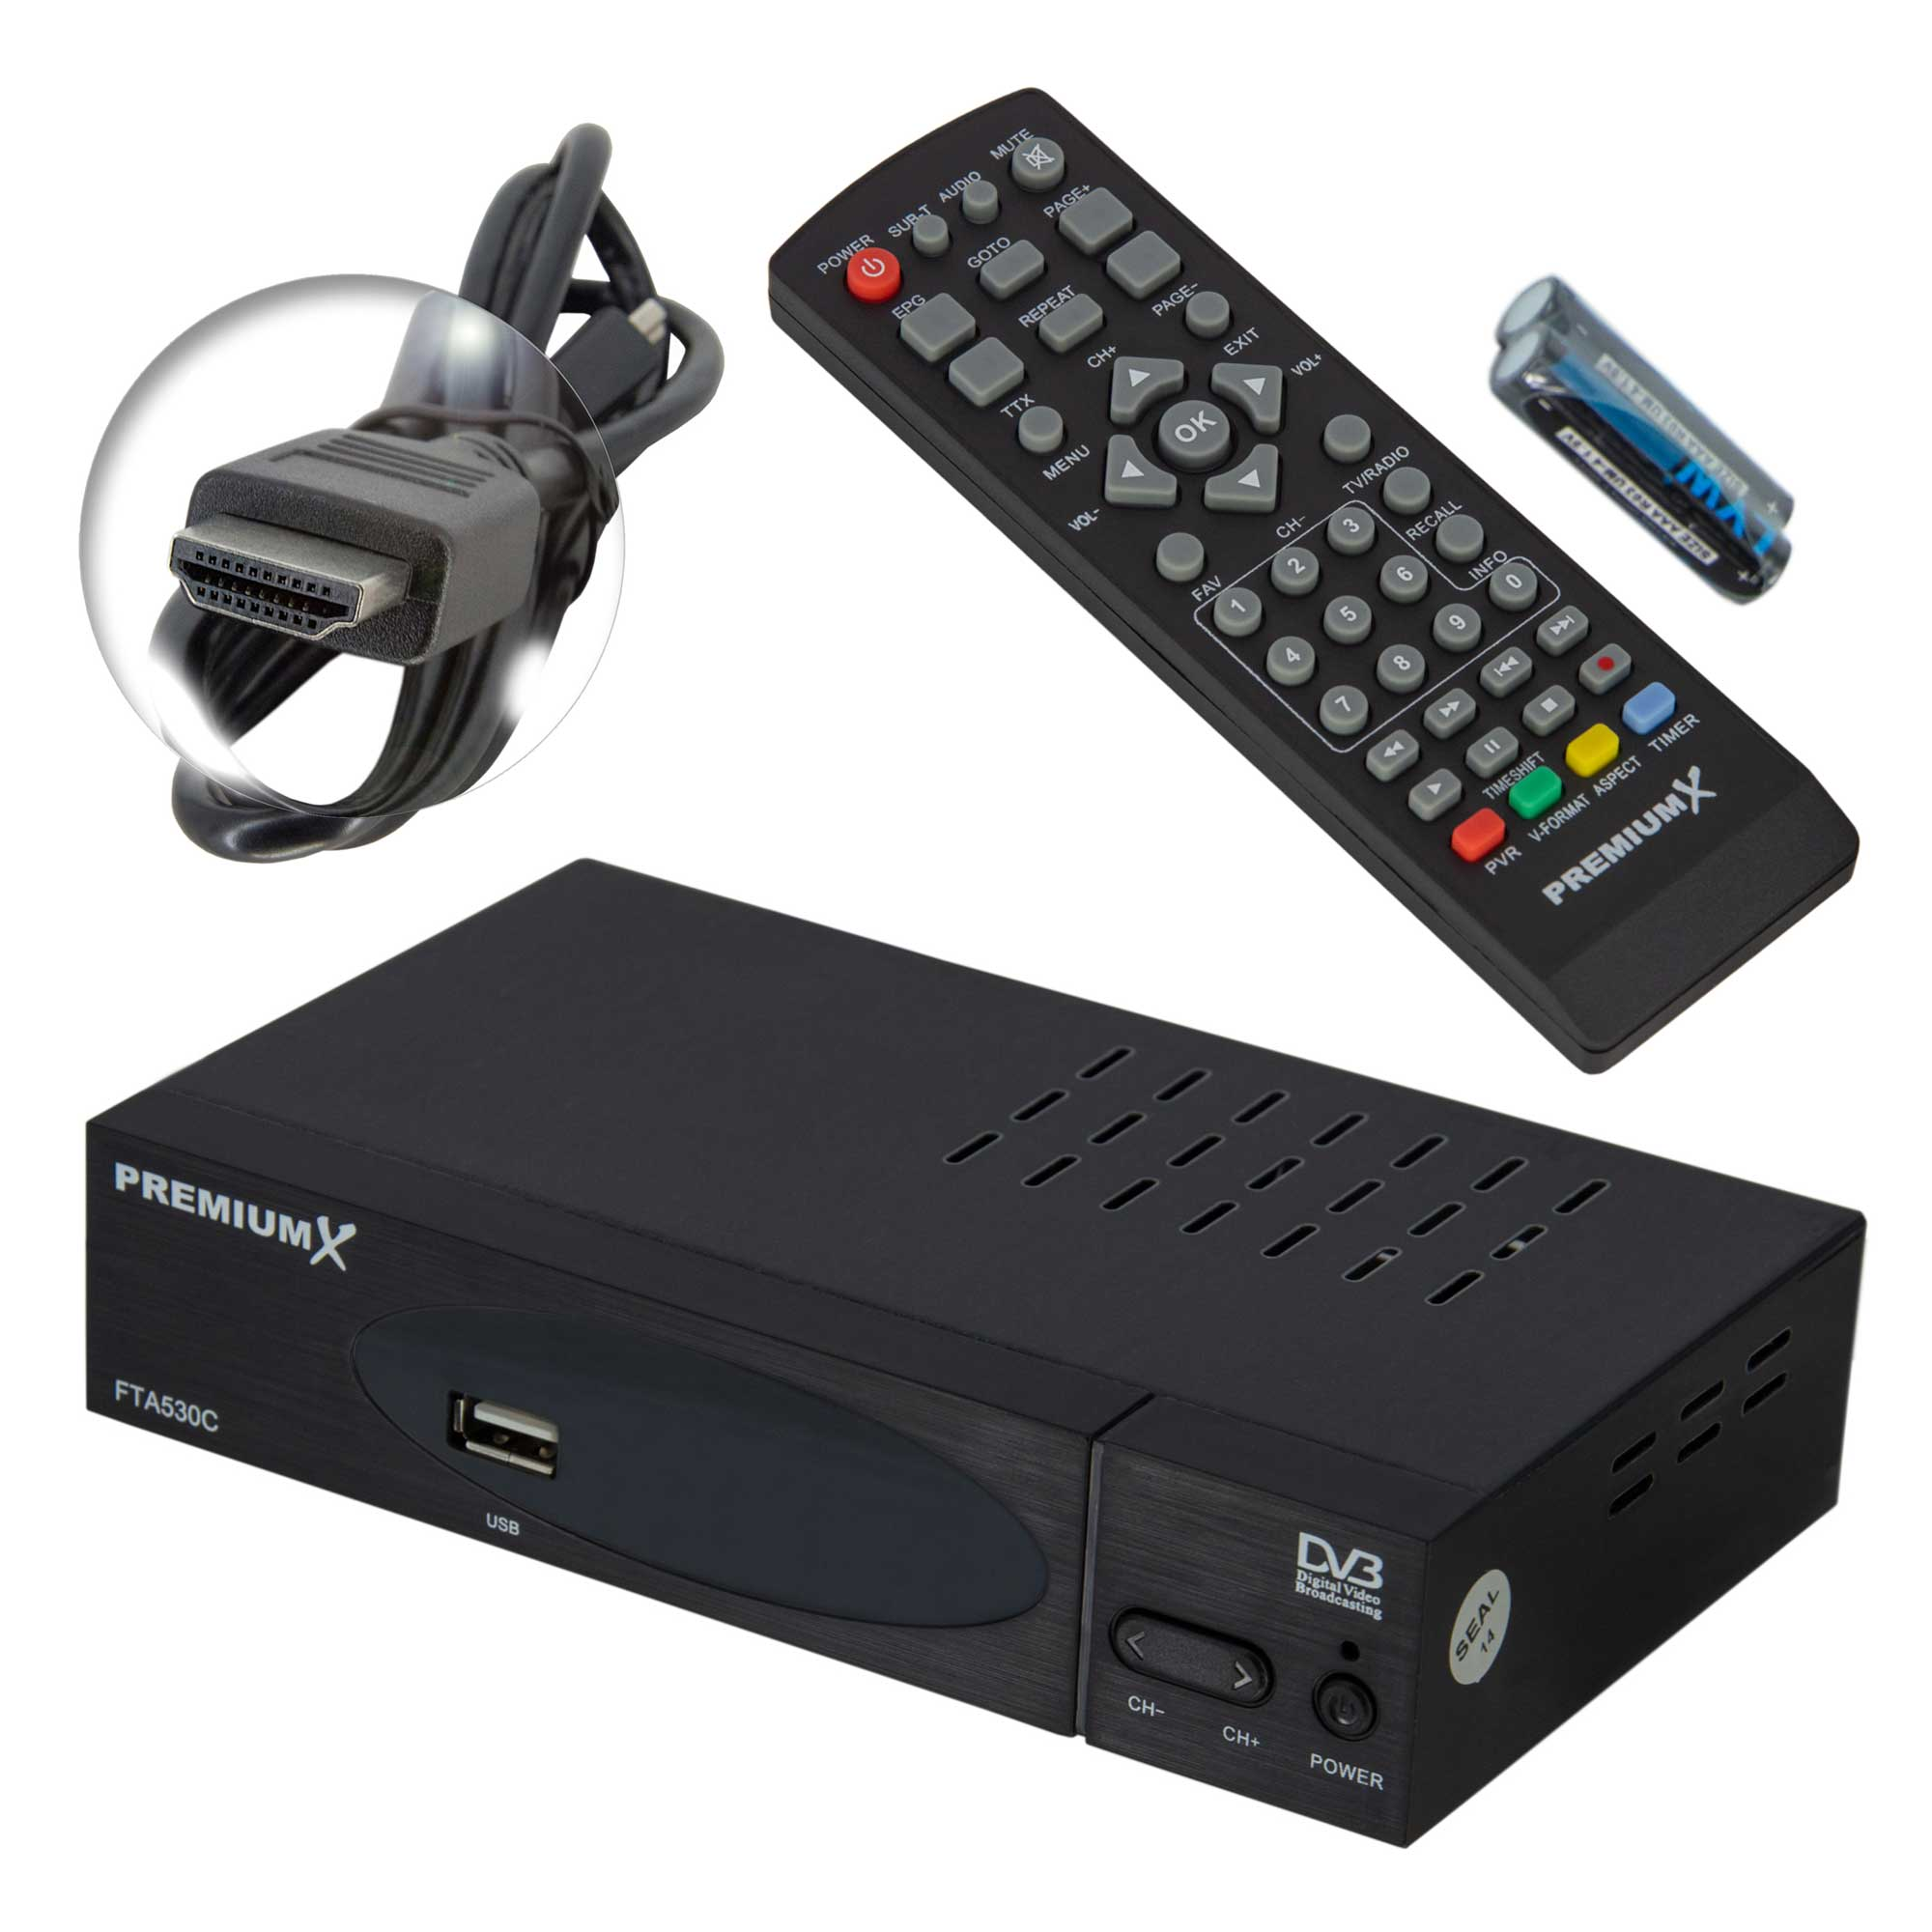 PREMIUMX FTA 530C Kabel DVB-C HDMI HD Digital (Schwarz) Receiver Receiver FullHD USB Kabel SCART